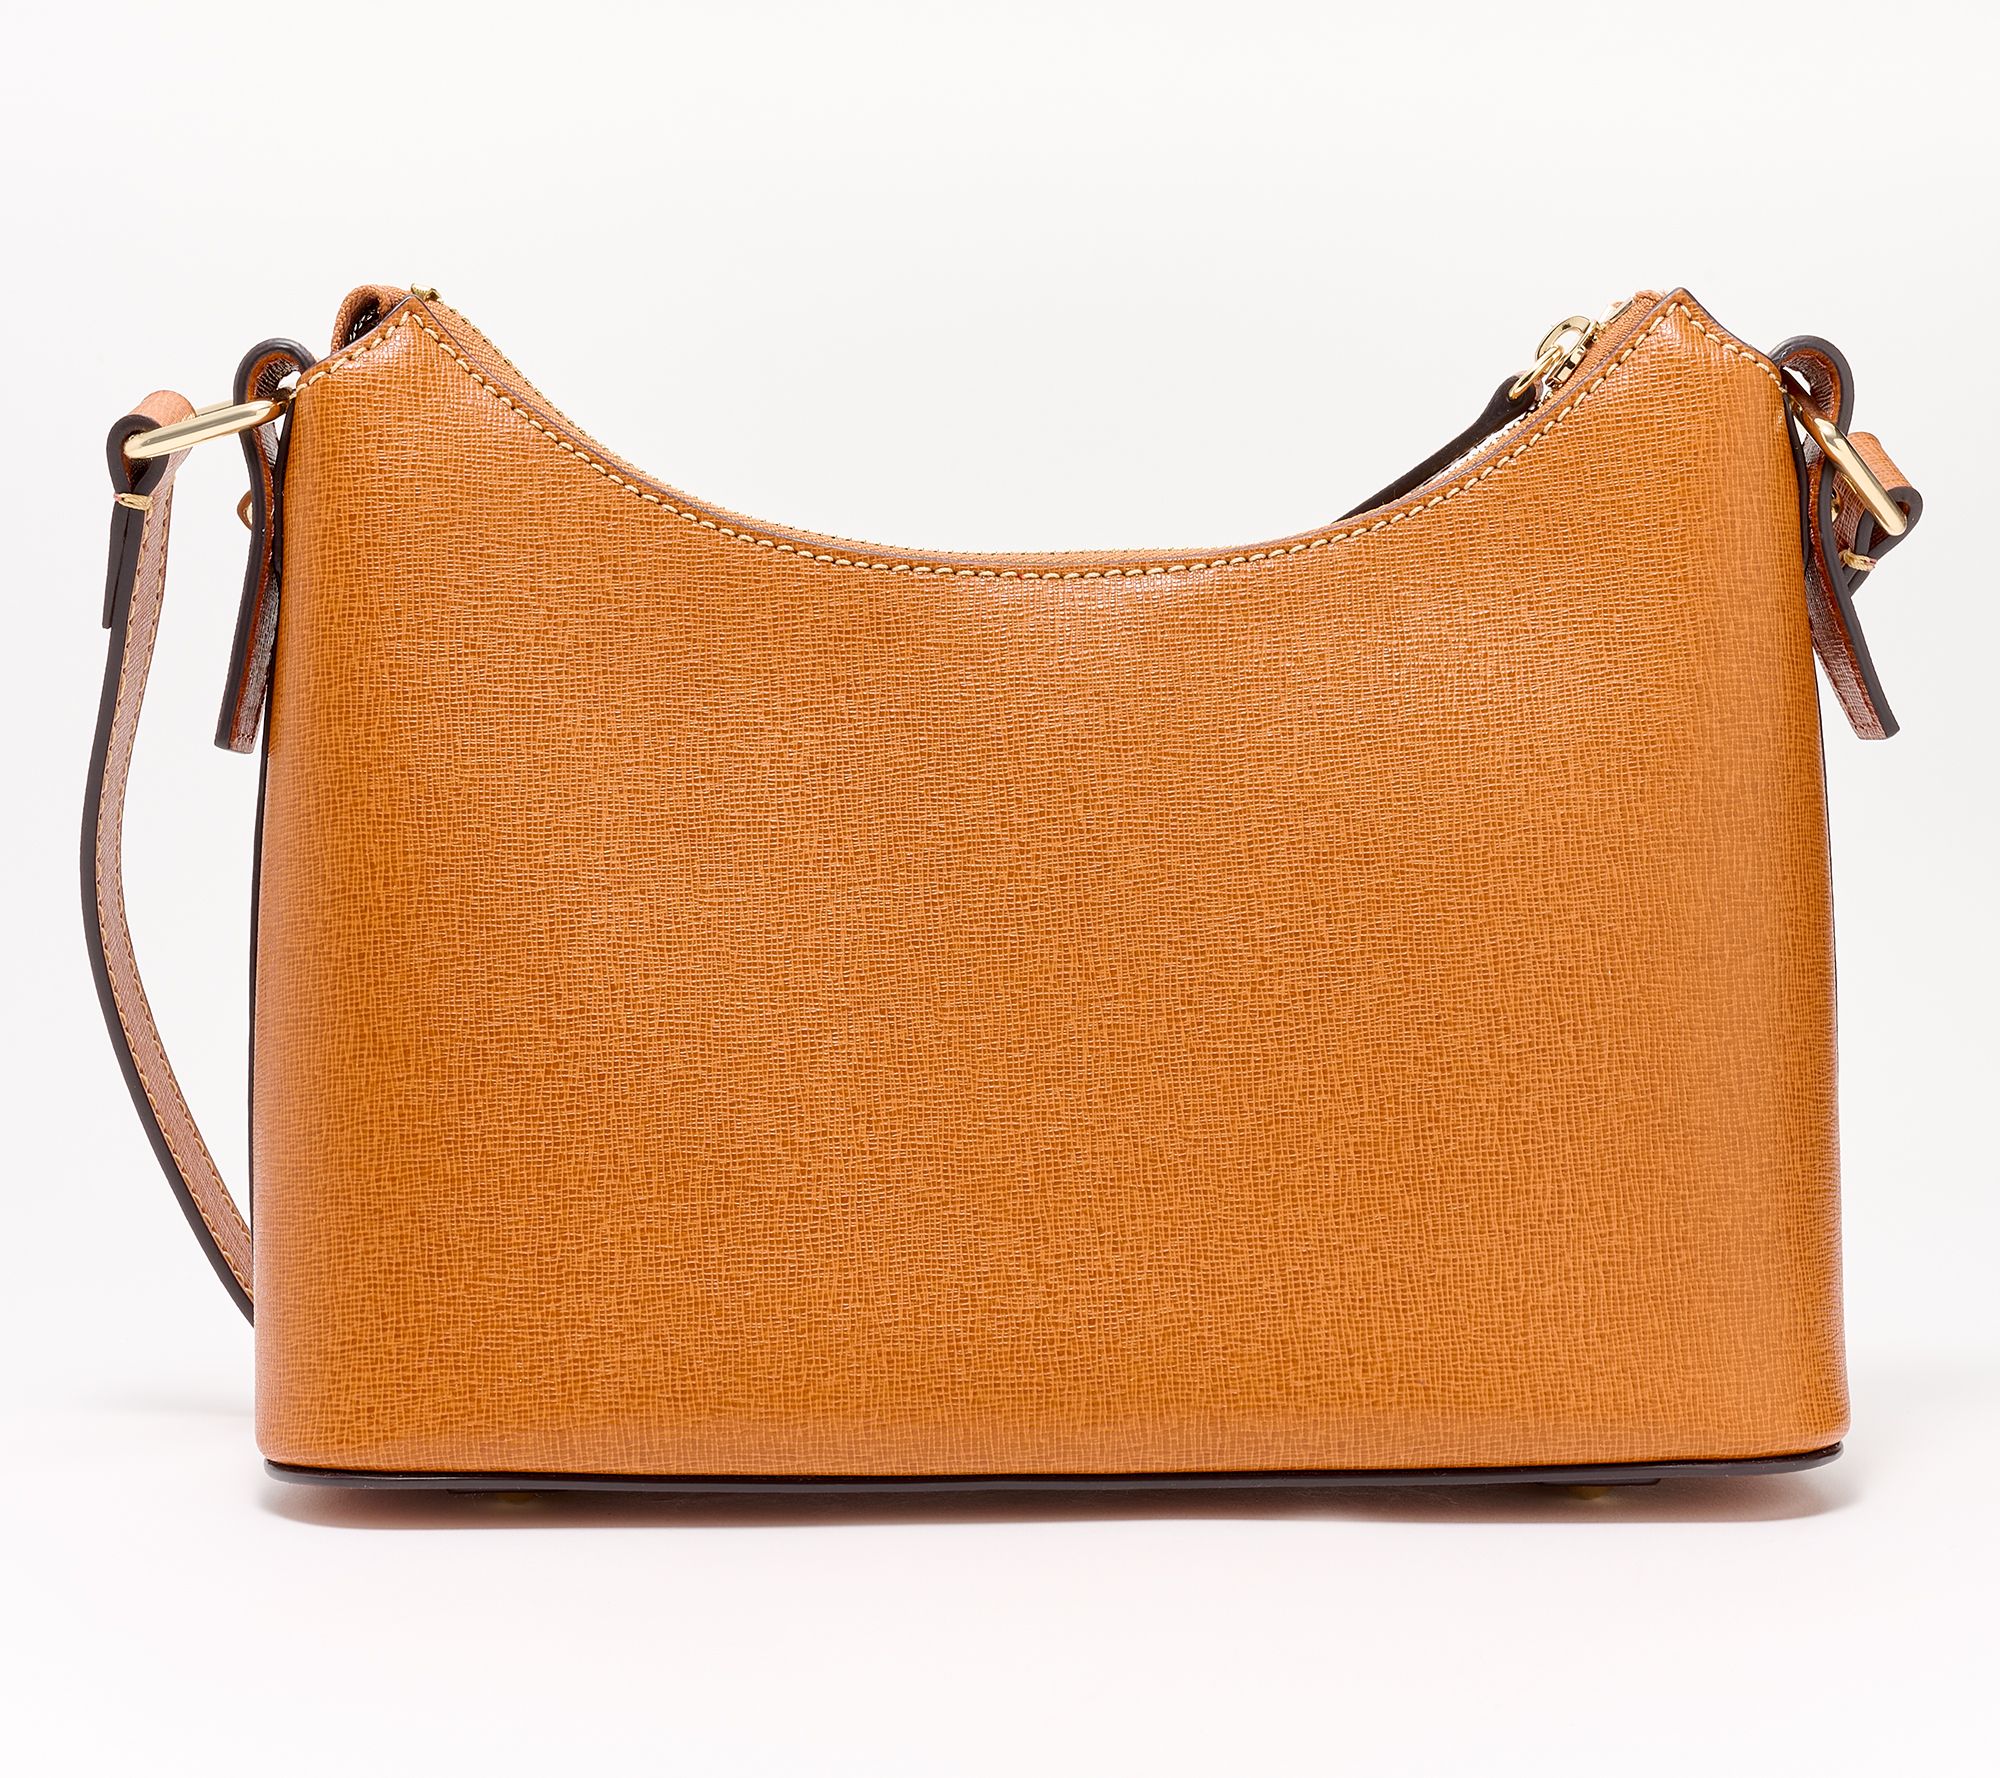 Dooney & Bourke Saffiano Leather Drawstring Bag on QVC 